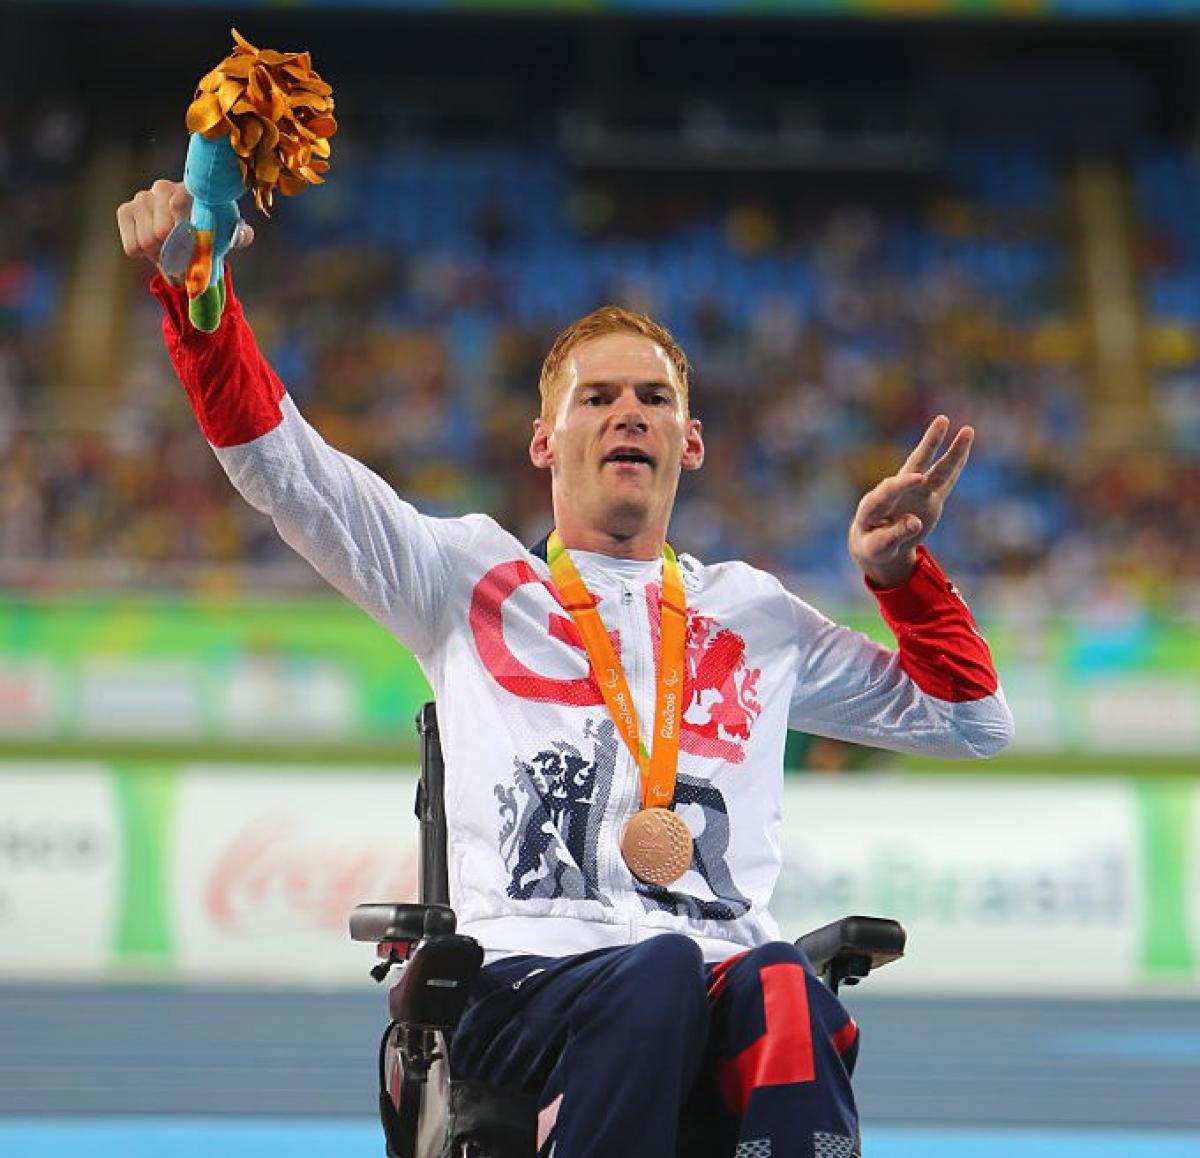 Male British athlete with cerebral palsy celebrates on the podium